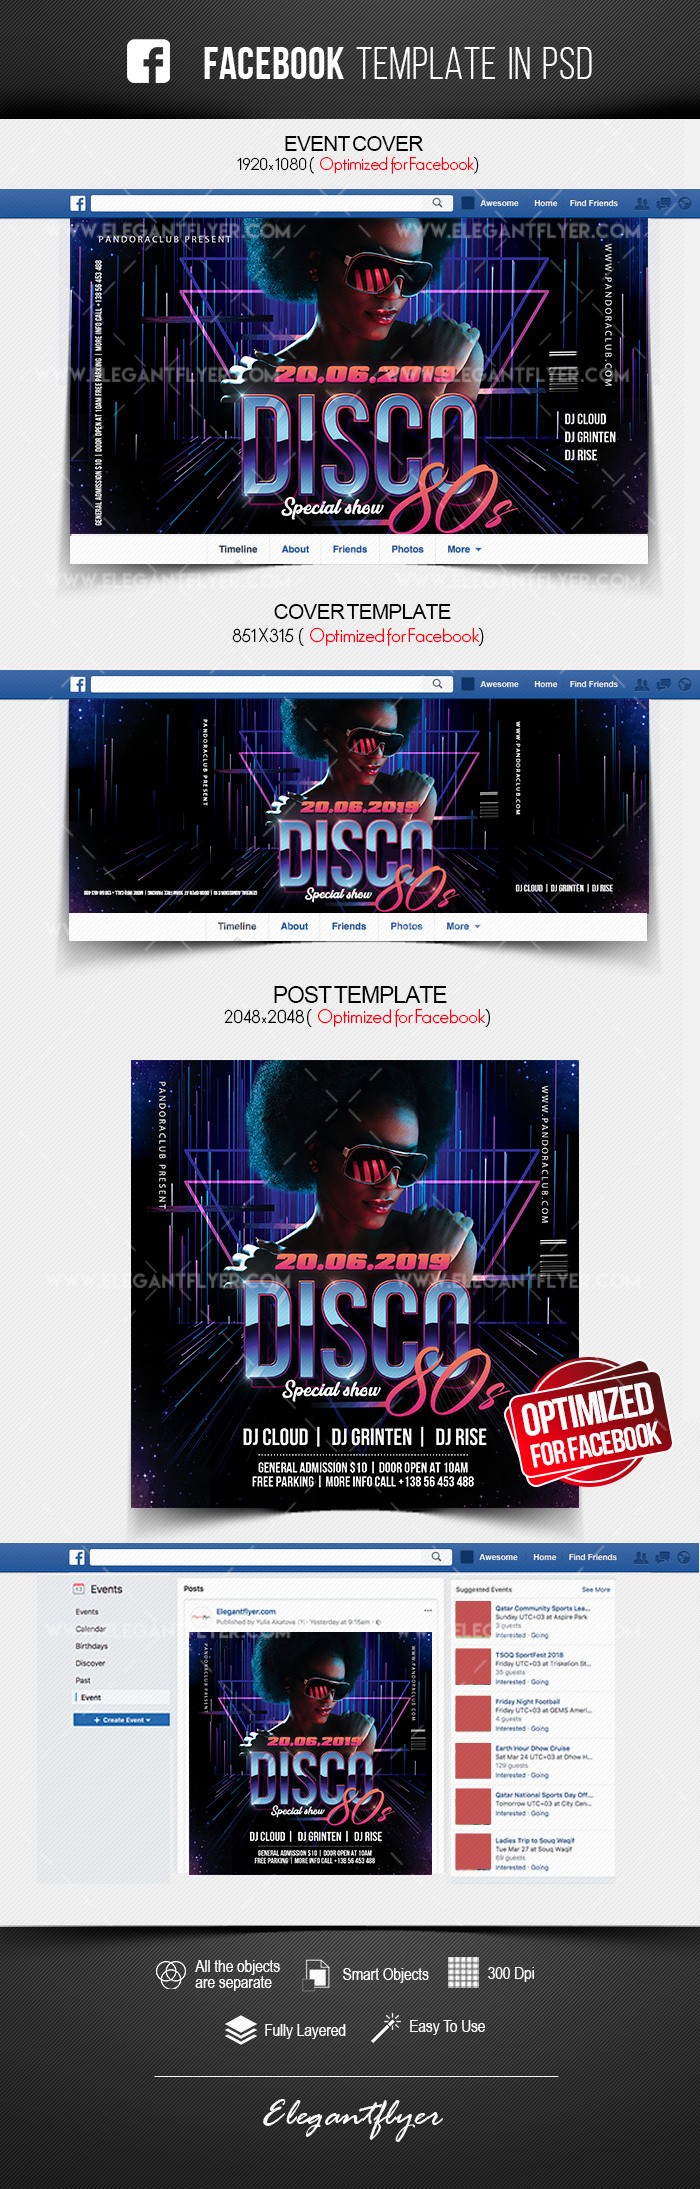 Disco 80s Facebook by ElegantFlyer